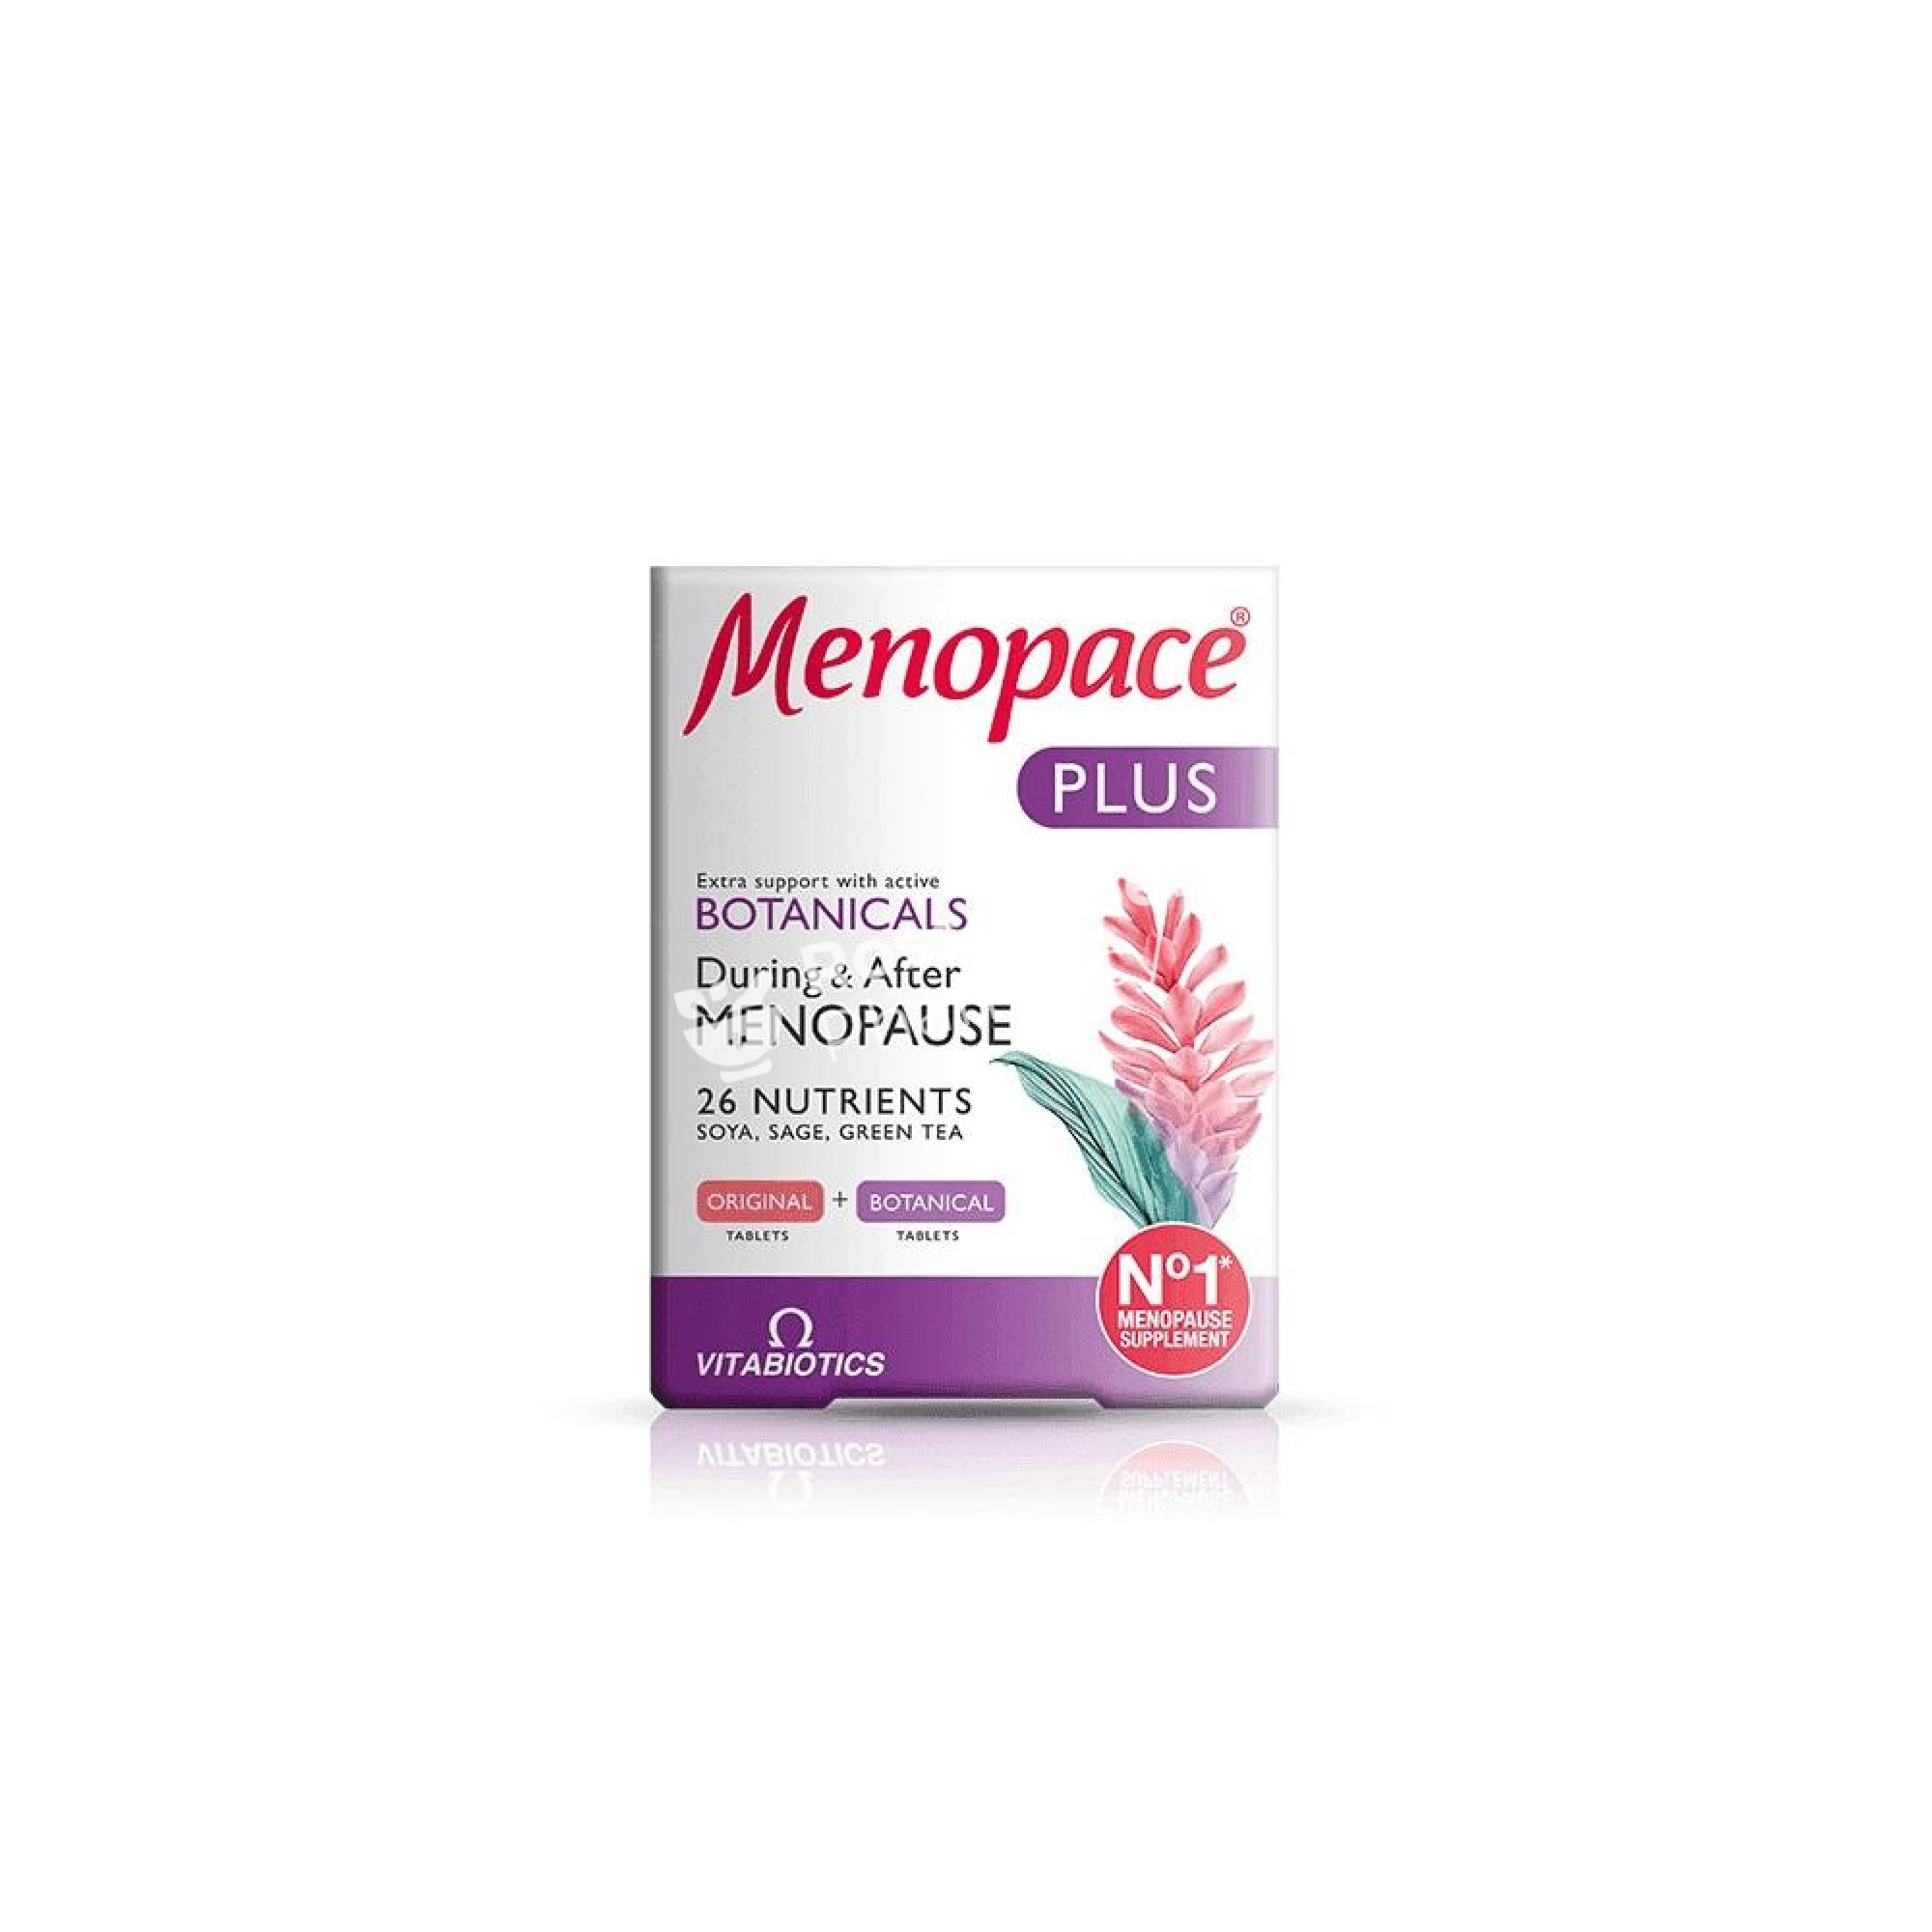 Vitabiotics - Menopace Plus Dual Pack 28 Original Tablets + Botanical Womens Health